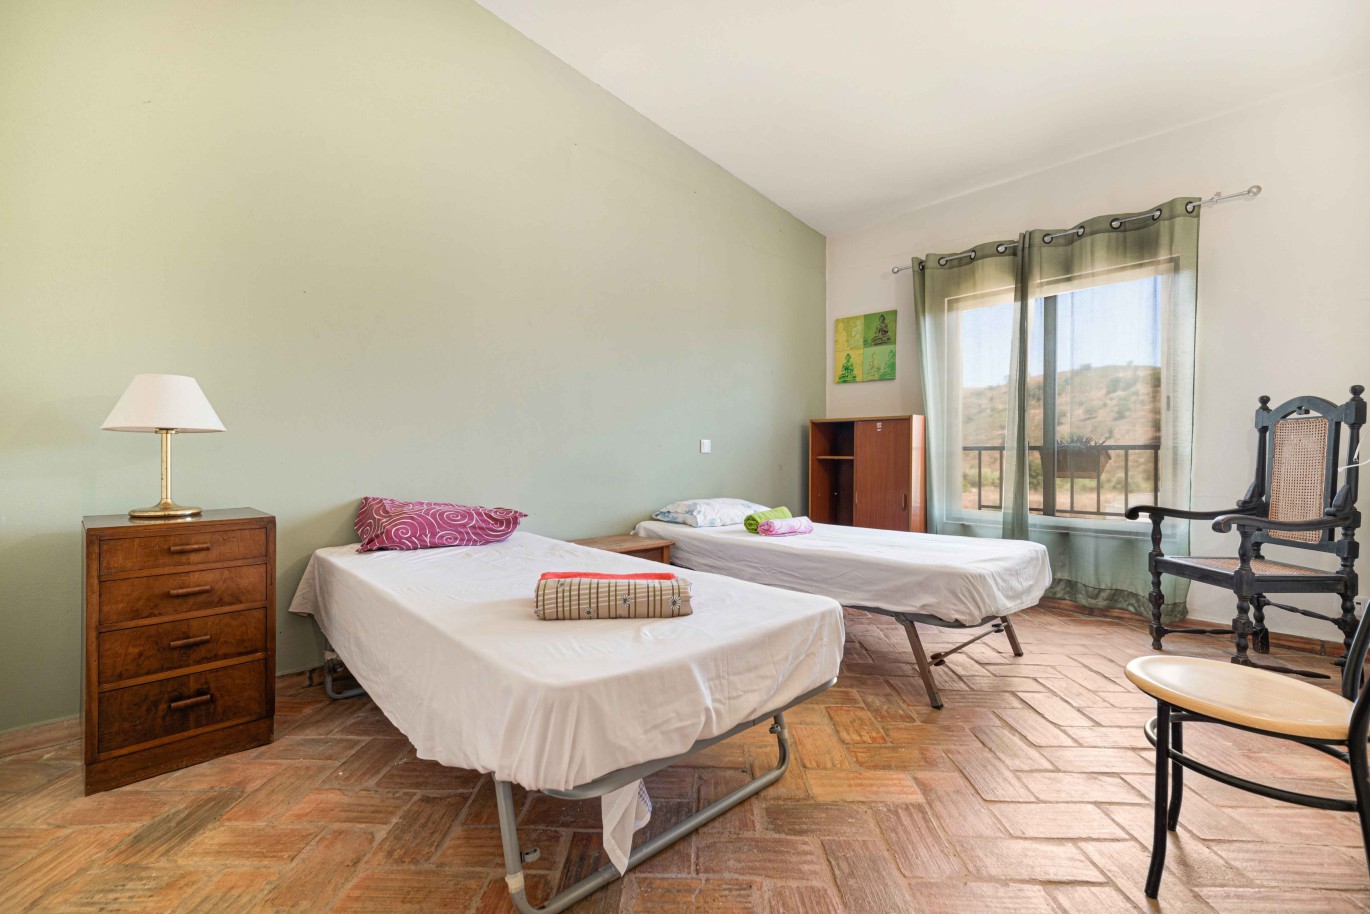 9 Bedroom Country Villa à vendre à Pereira, Algarve_231606